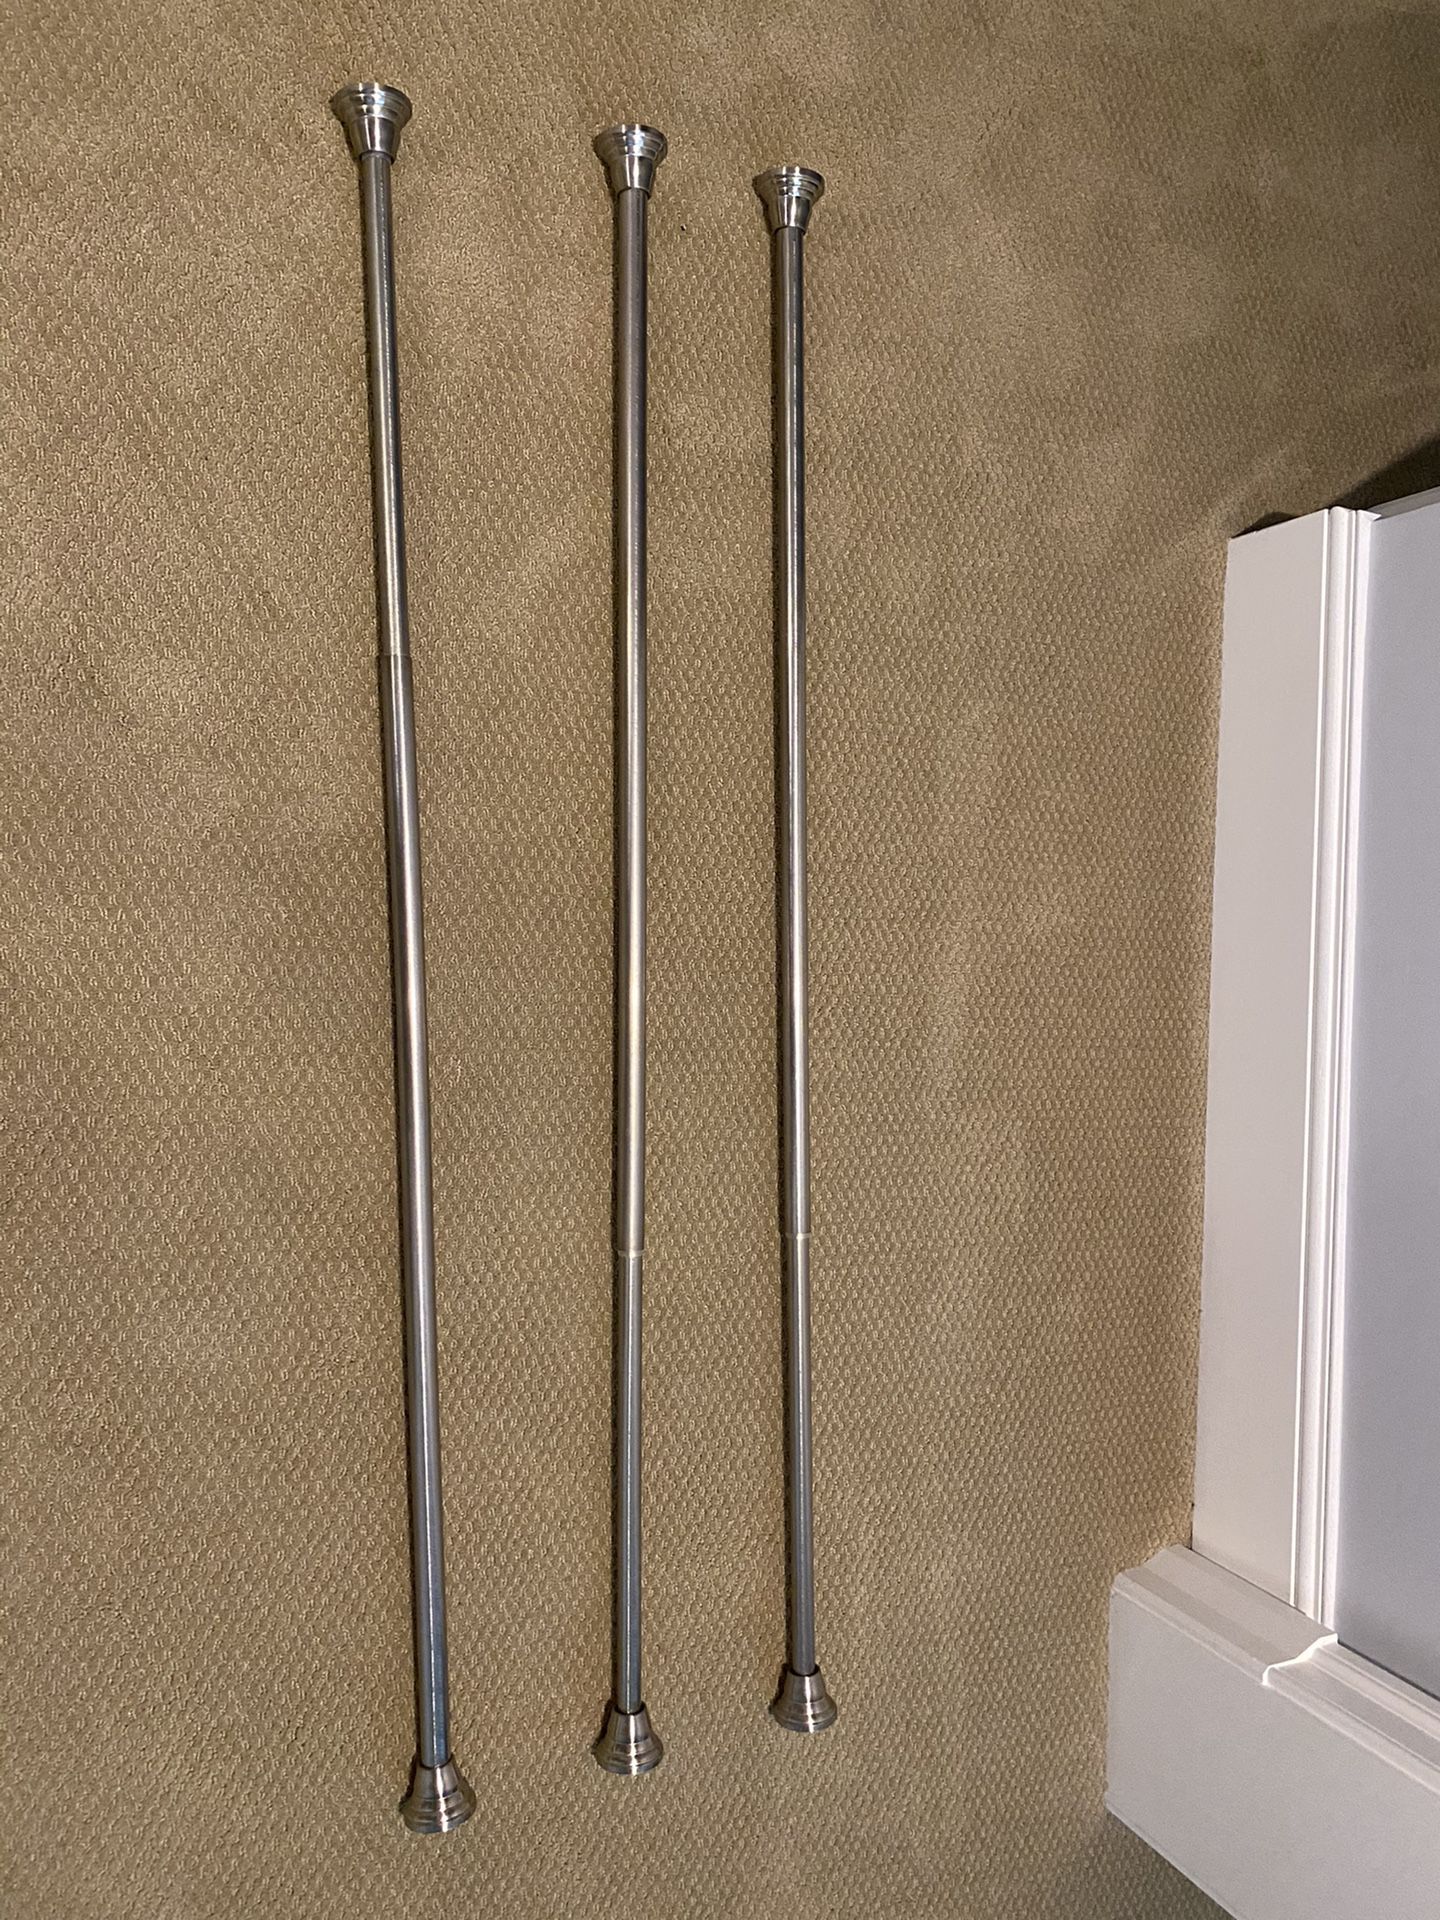 Shower rods (heavy duty, new)